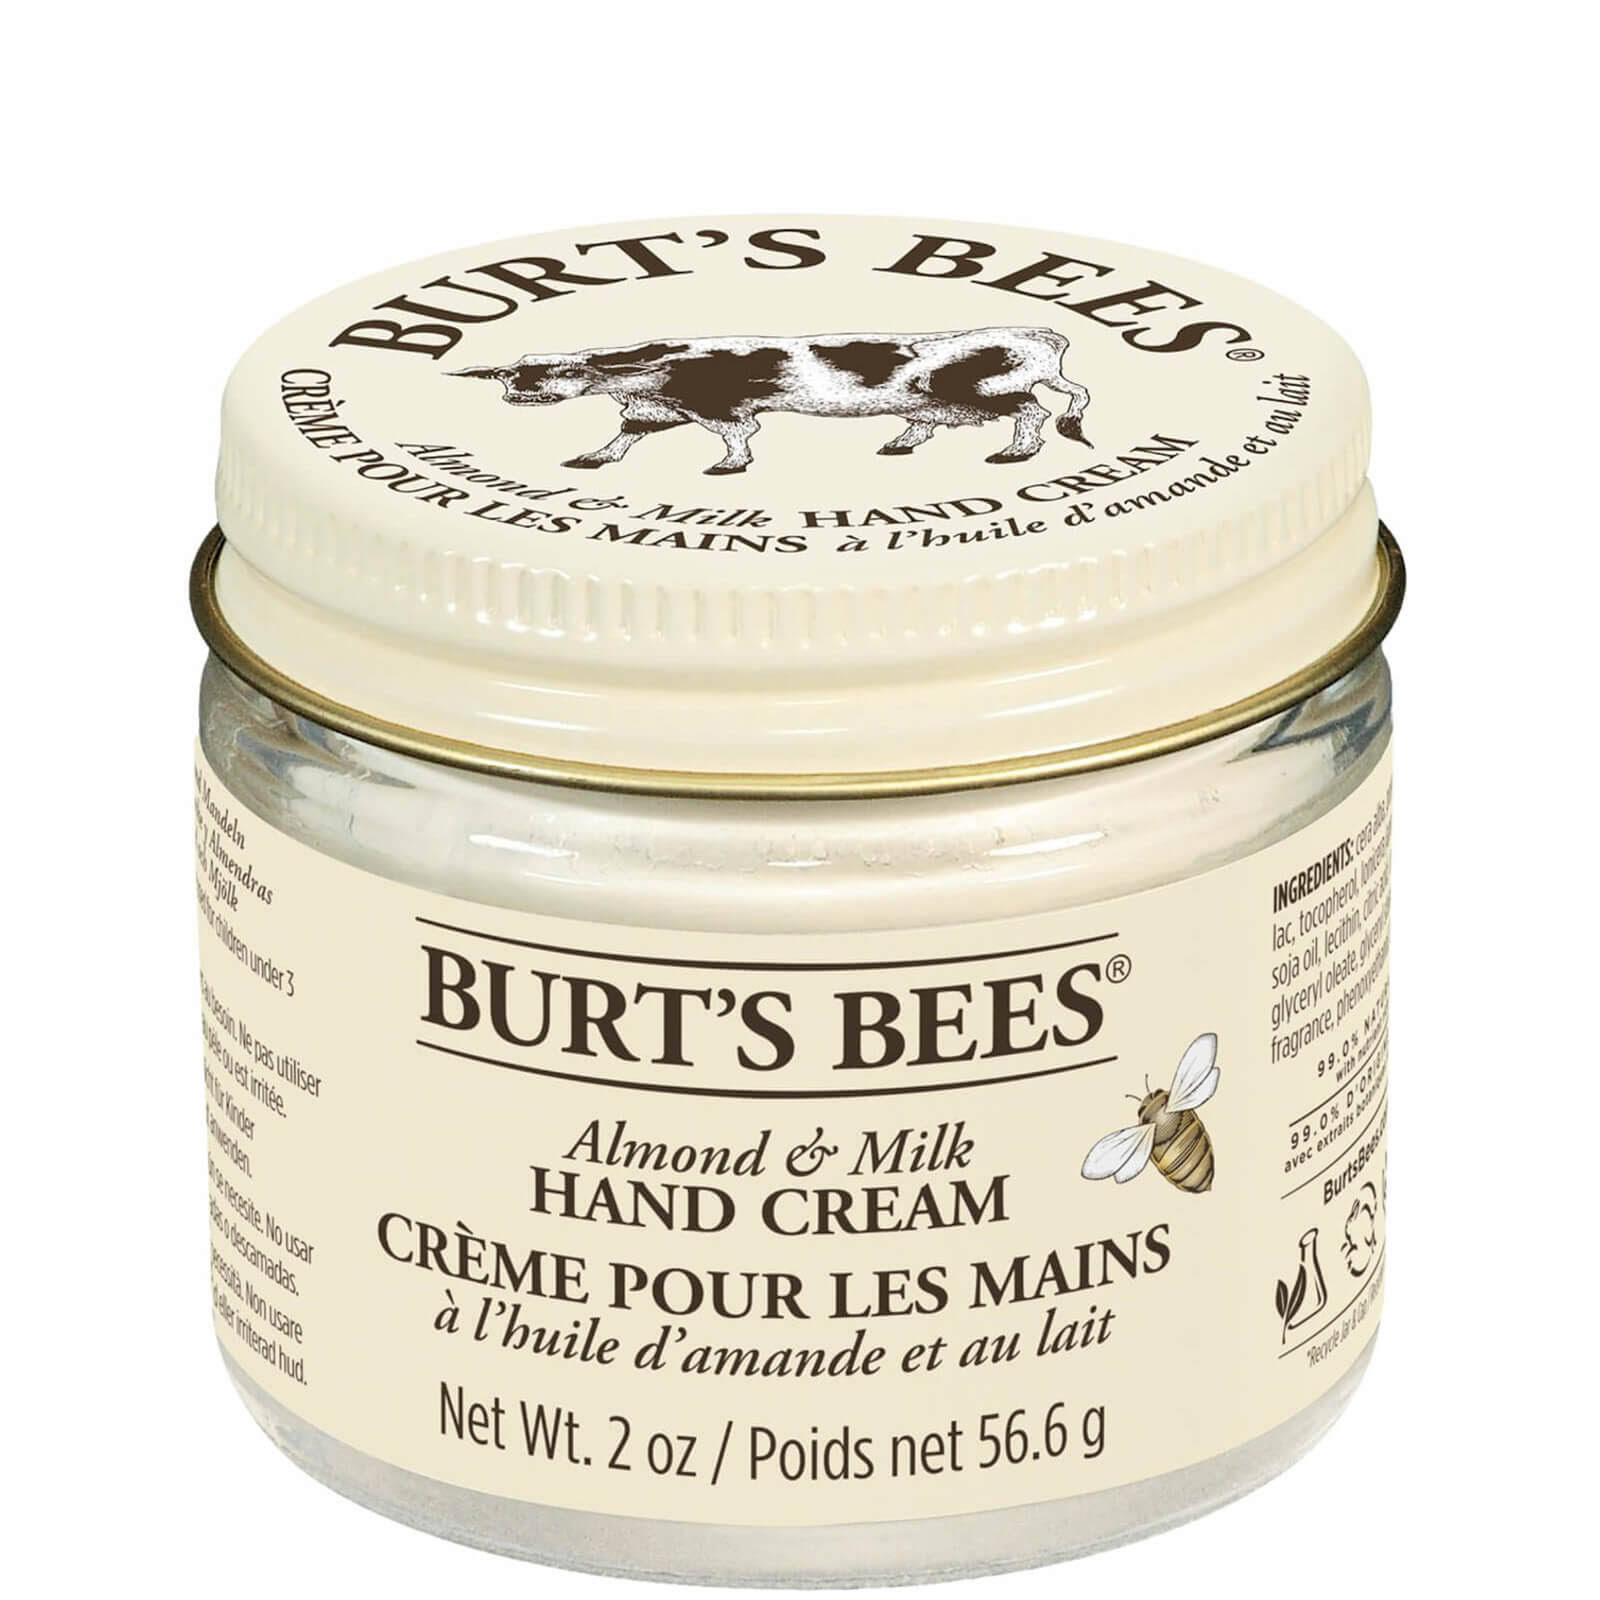 Burt's Bees Hand Cream - Almond & Milk, 57g